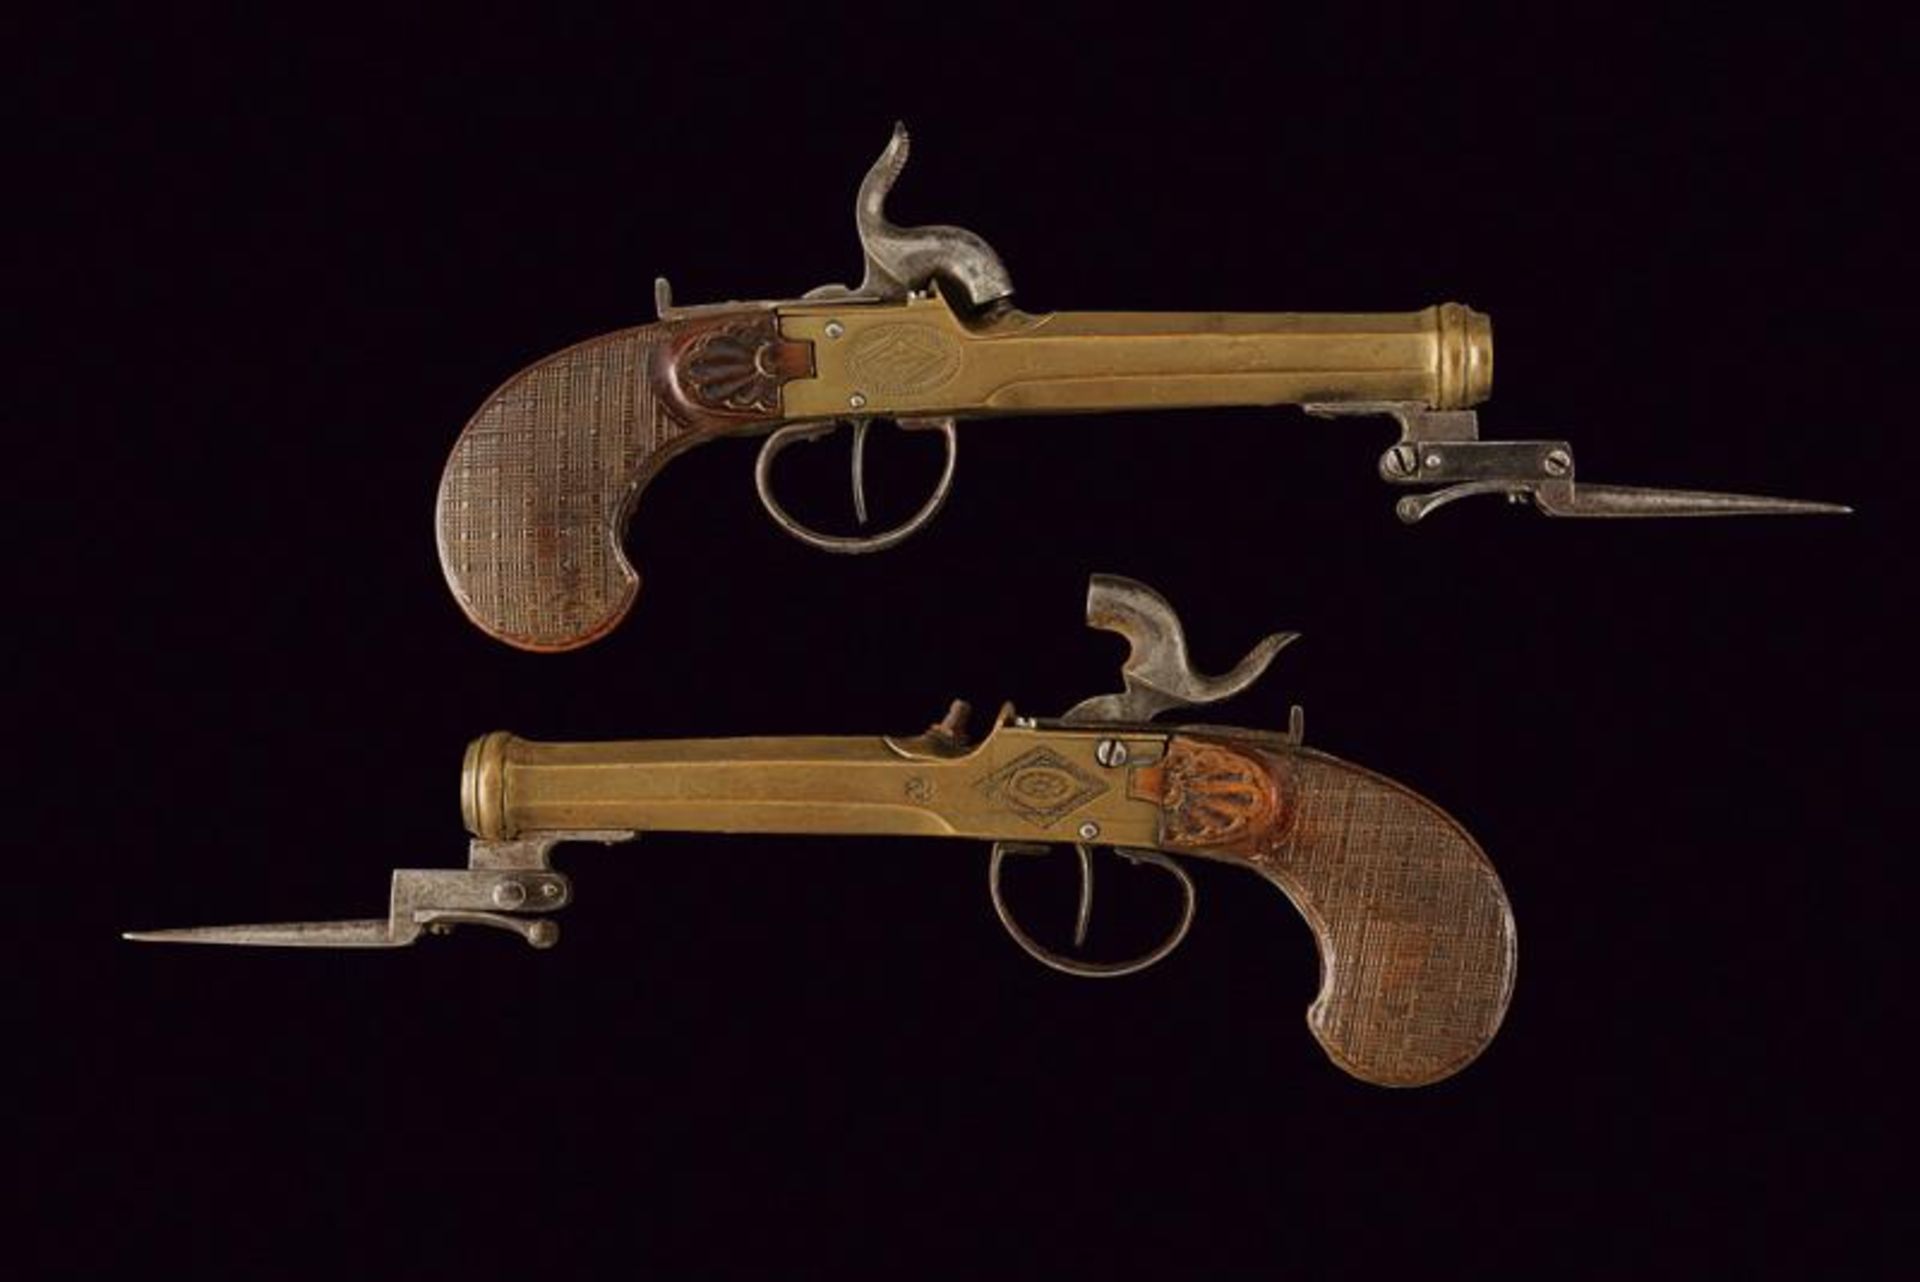 A pair of marine percussion boxlock pistols with bayonet